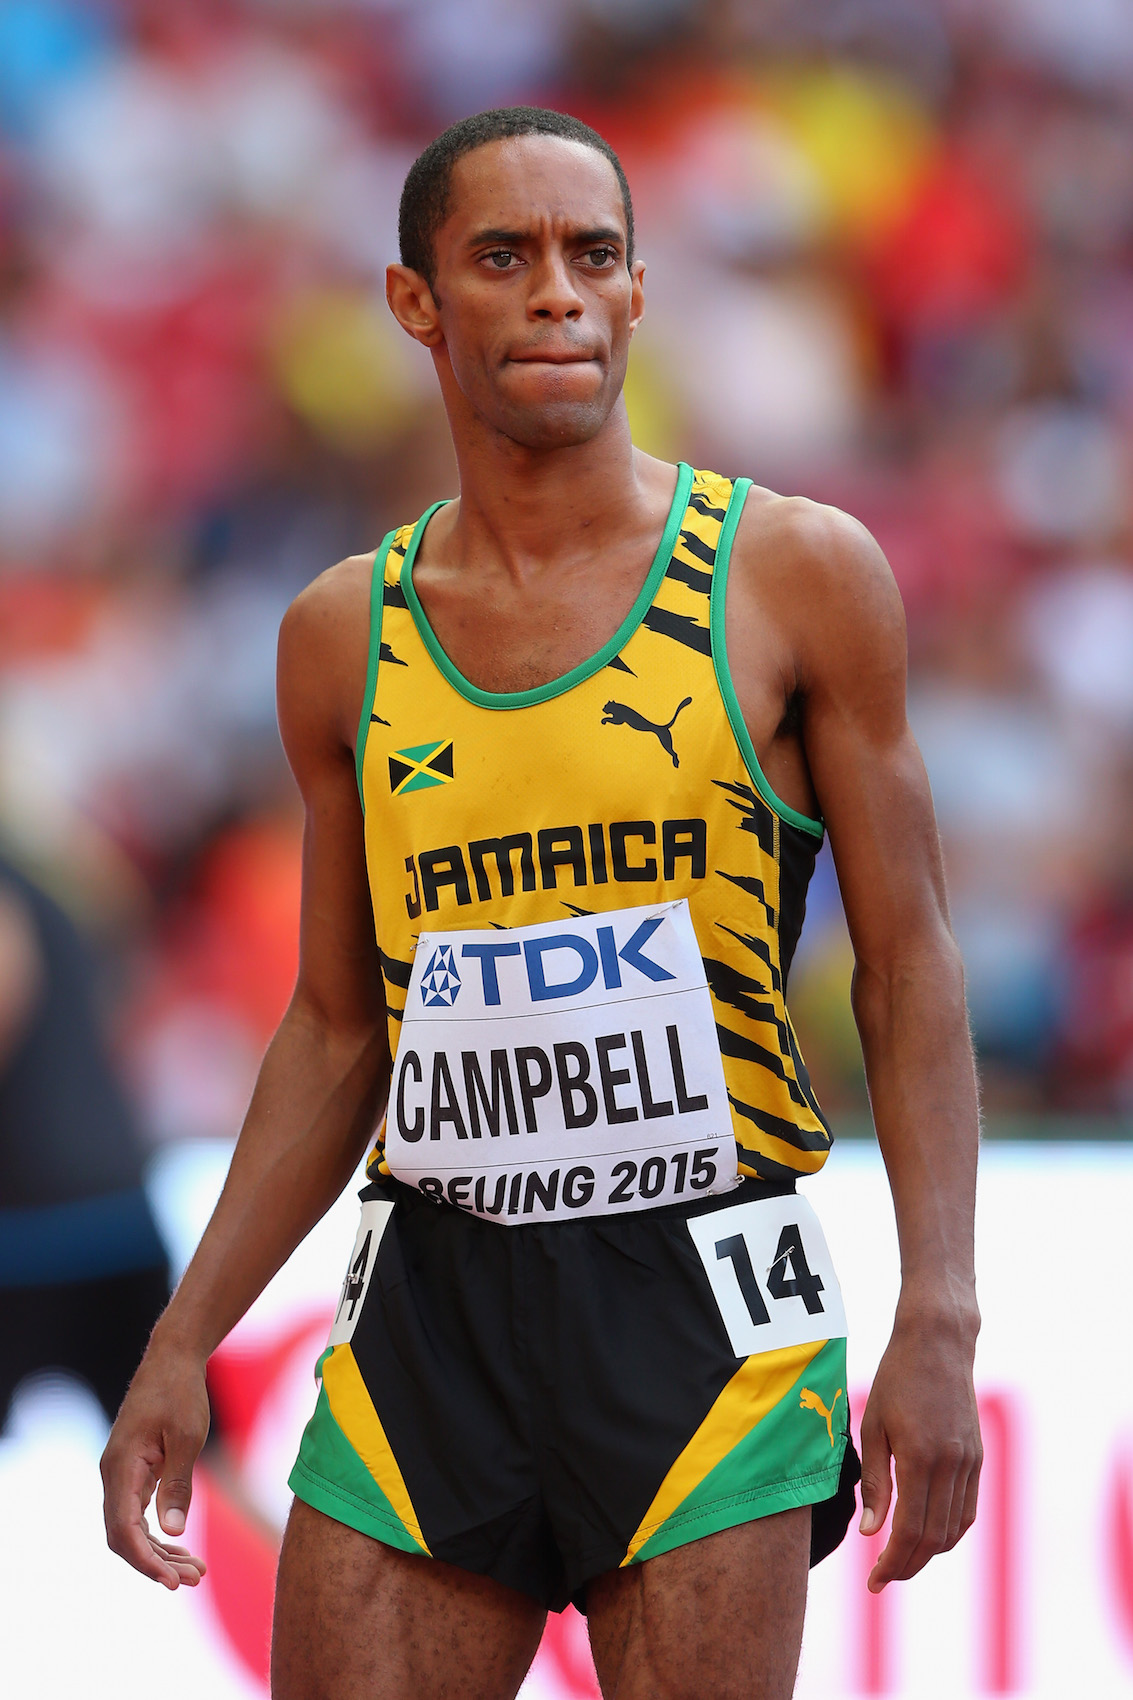 Campbell falls short in 5000m #Rio2016